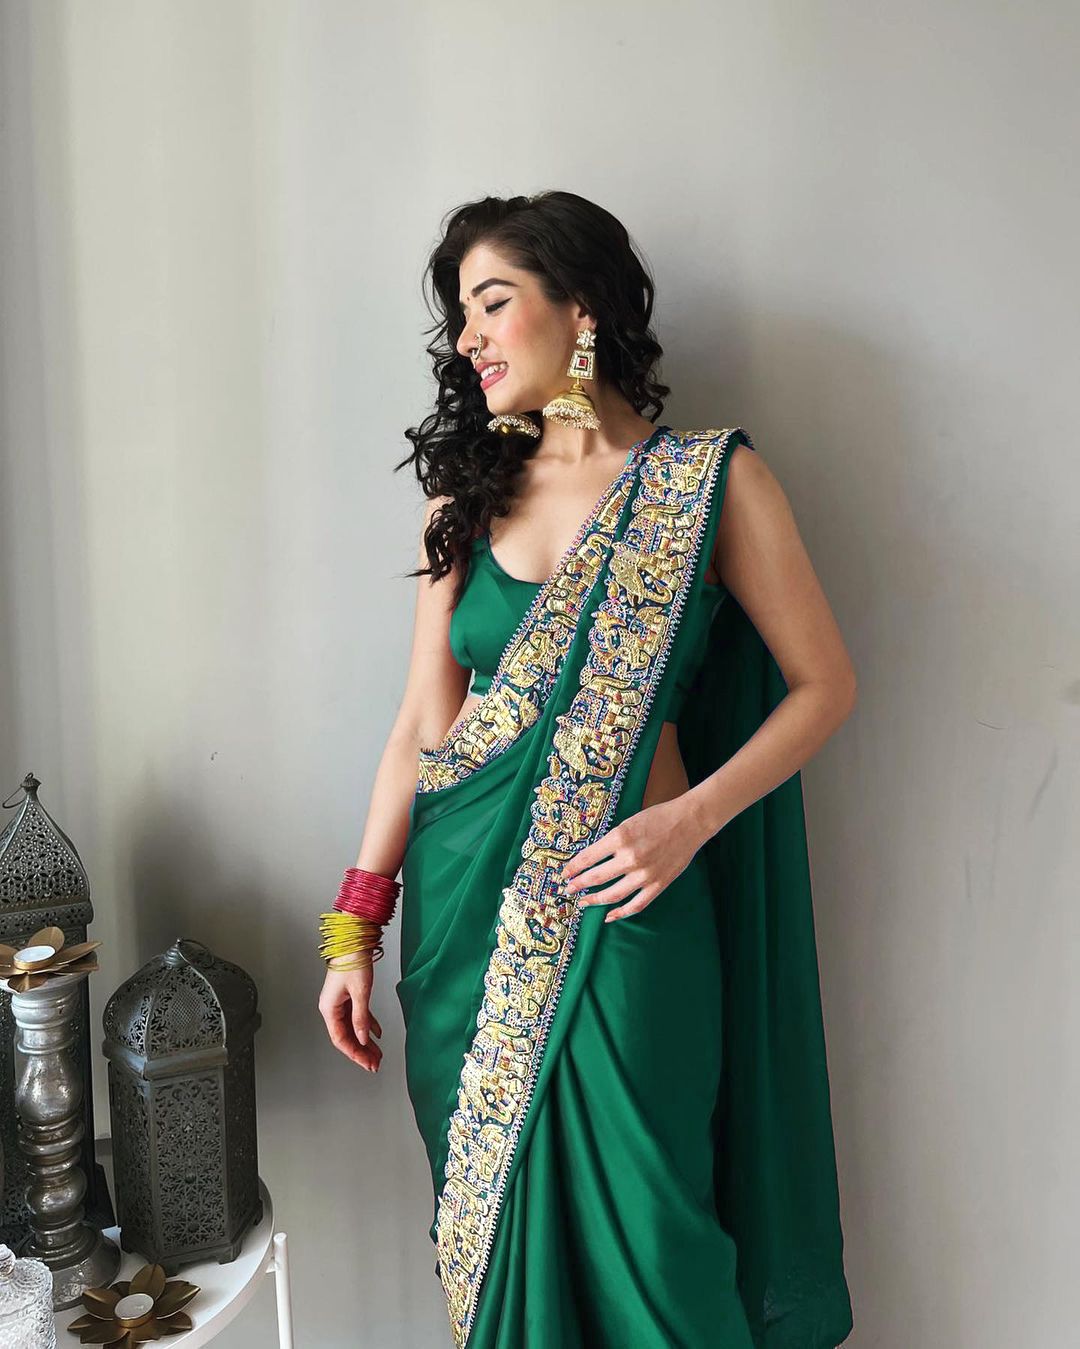 Bottle Green Satin Silk Plain Saree & Gold Sequence Embroidery Unstitch  Blouse for Women Wear Partywear Sari Wedding Wear Sari in USA, UK,CA 